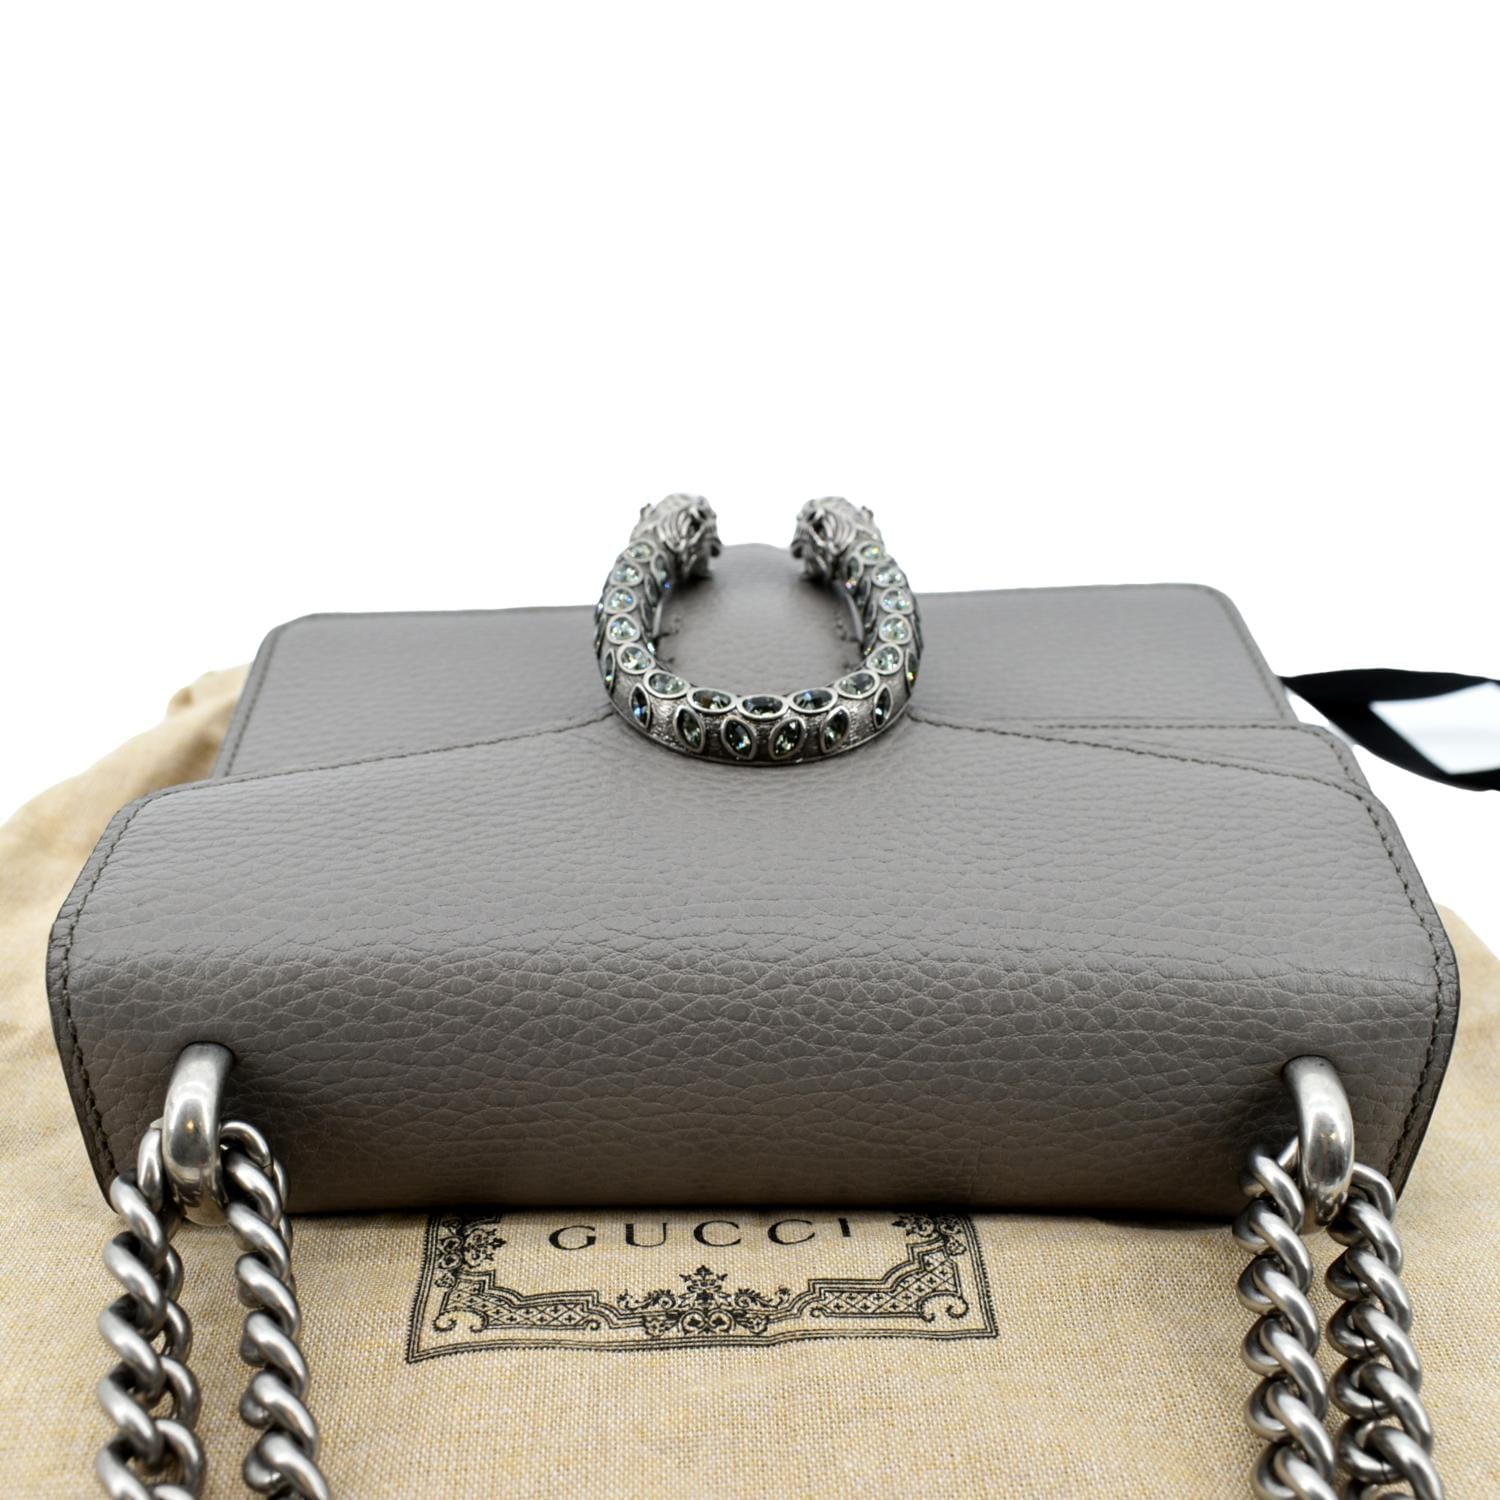 Gucci Dionysus Mini Leather Crossbody Bag in Gray